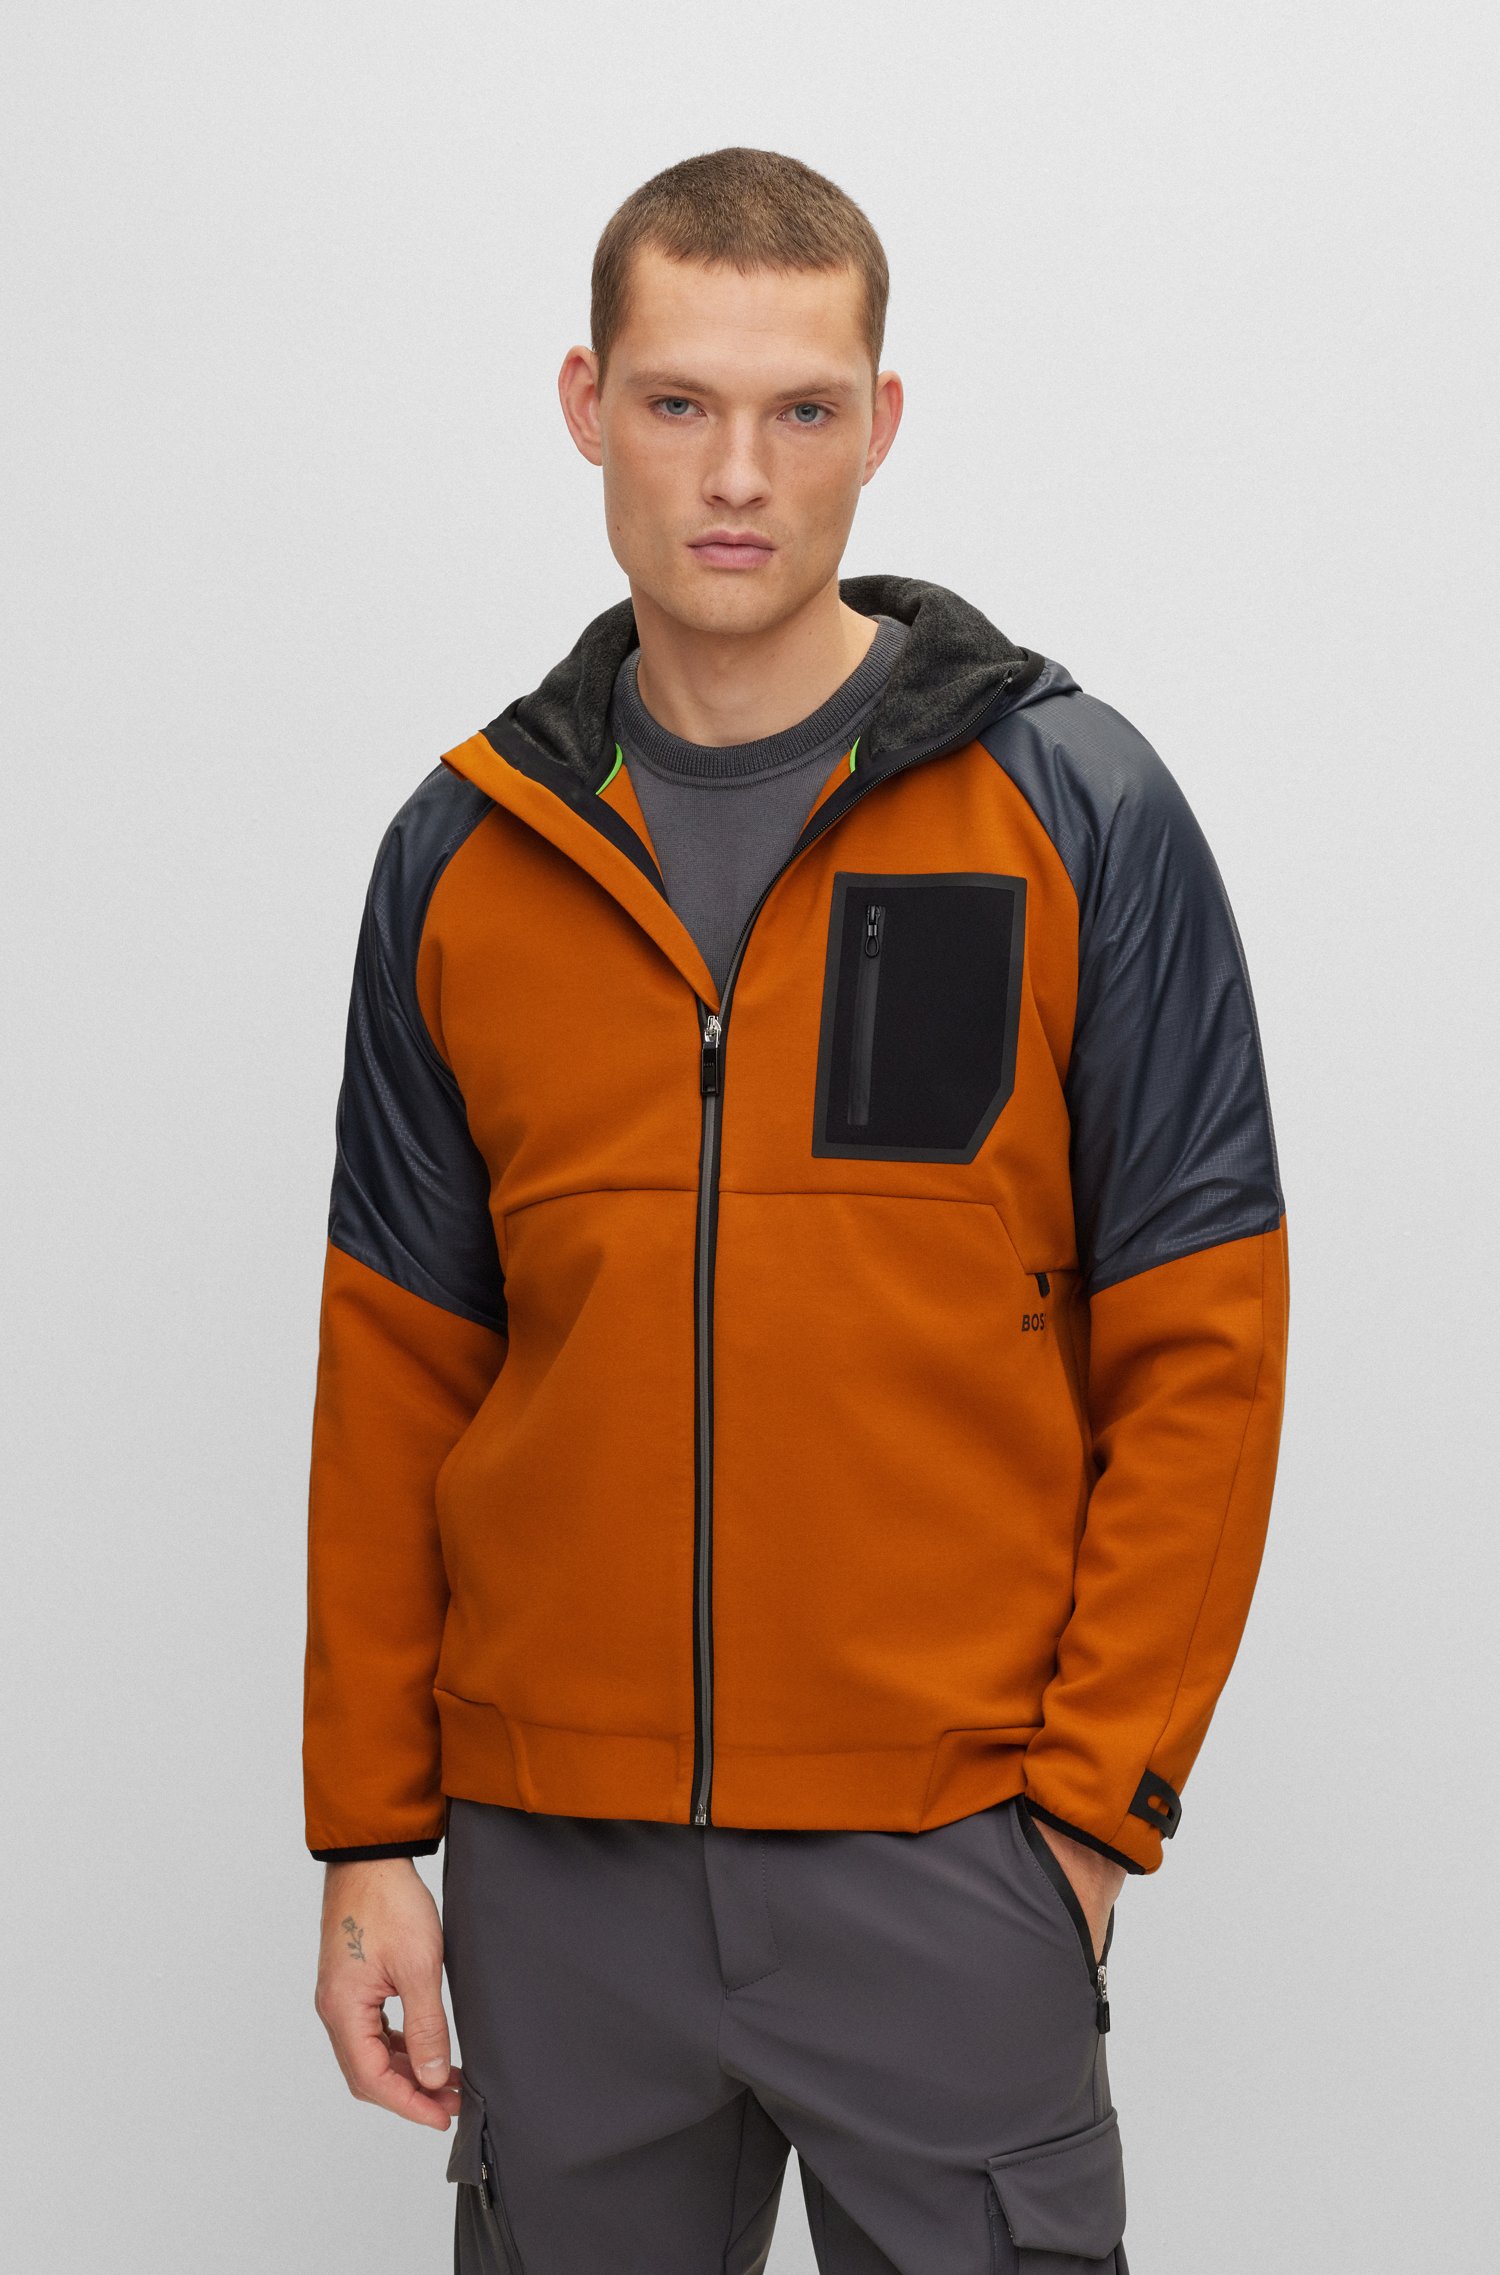 Mixed-material zip-up hoodie with fleece lining